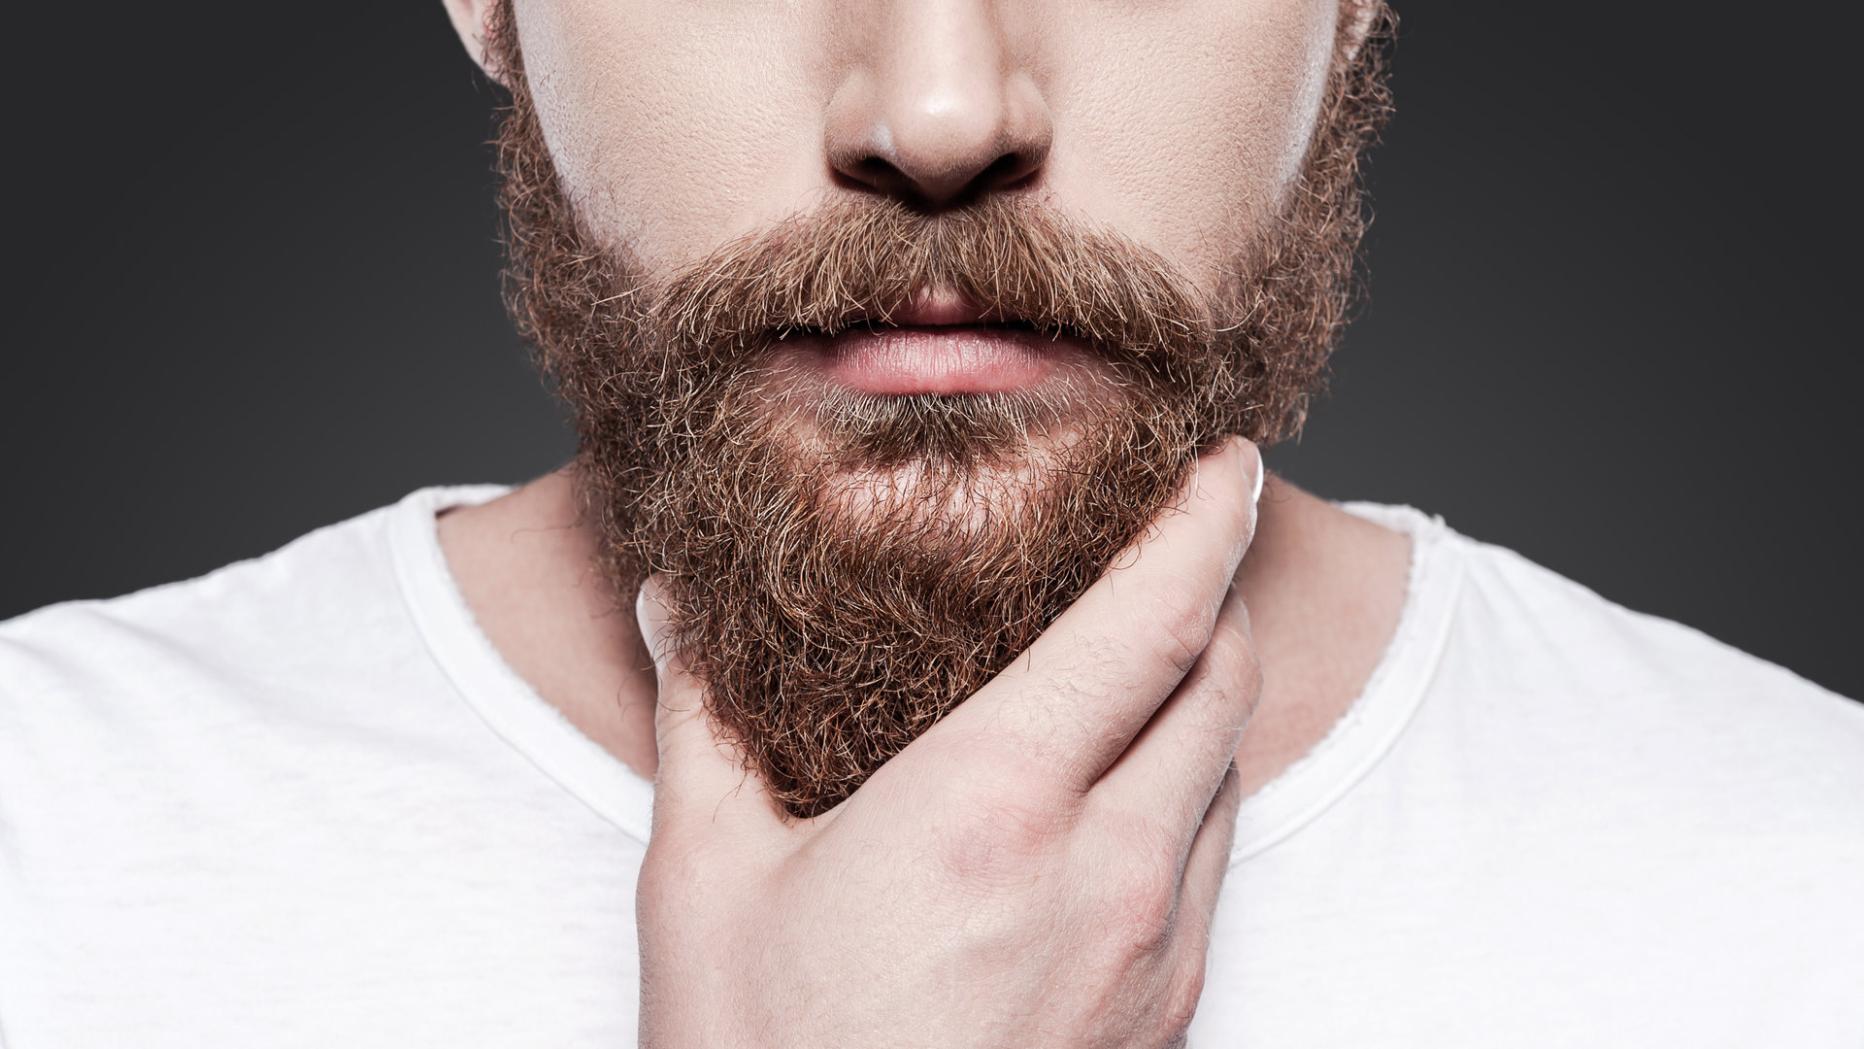 An den bartwuchs wangen kein Bartwuchs anregen